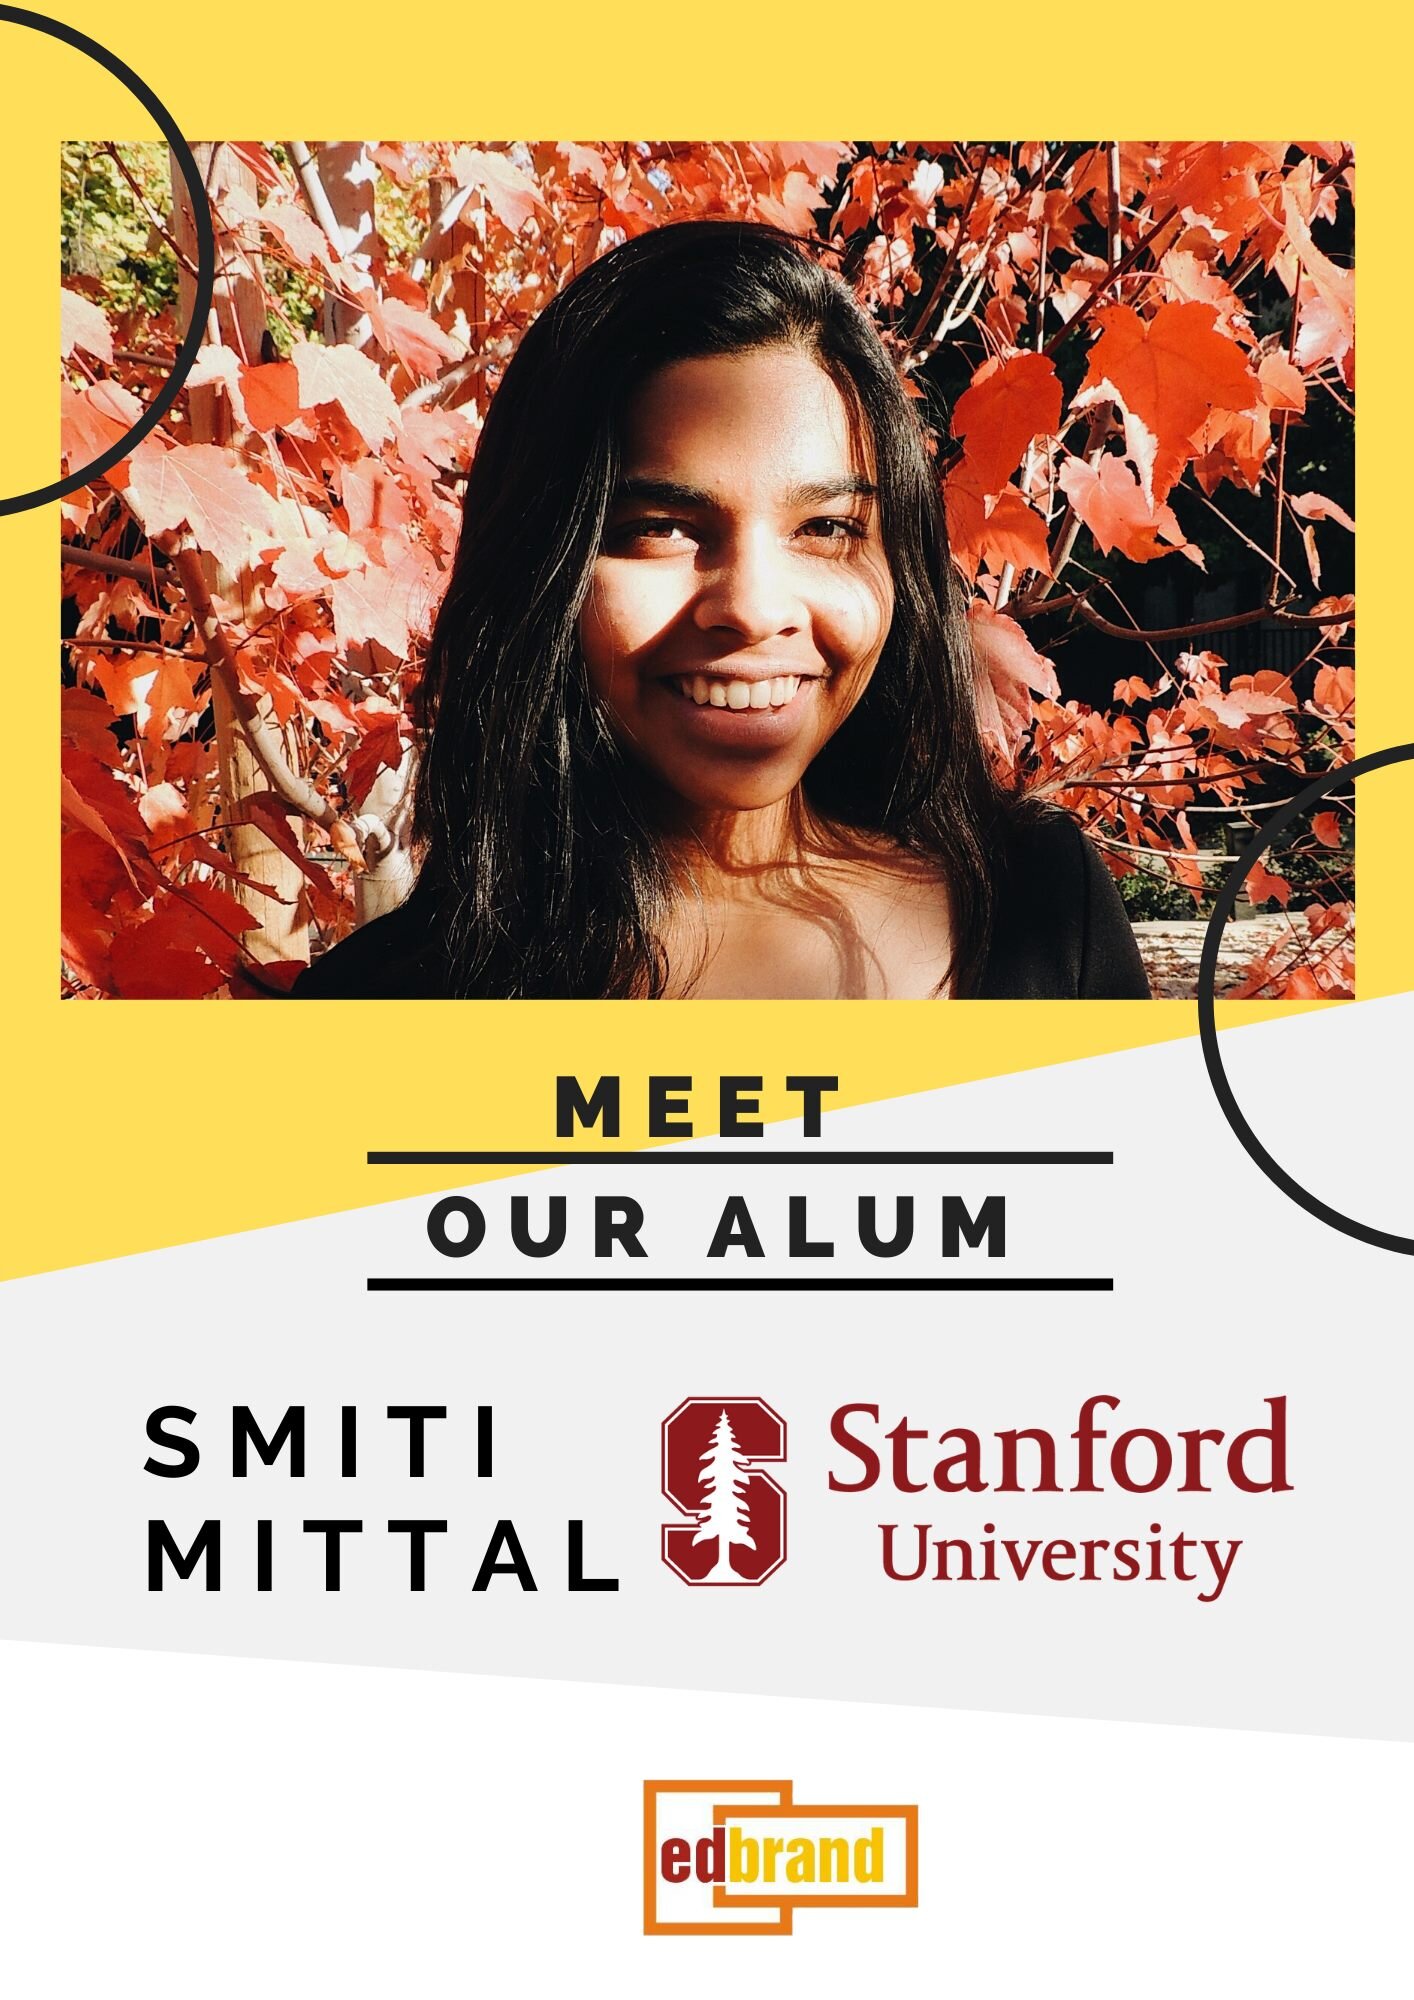 SmitiMittal_Poster_Stanford.jpg